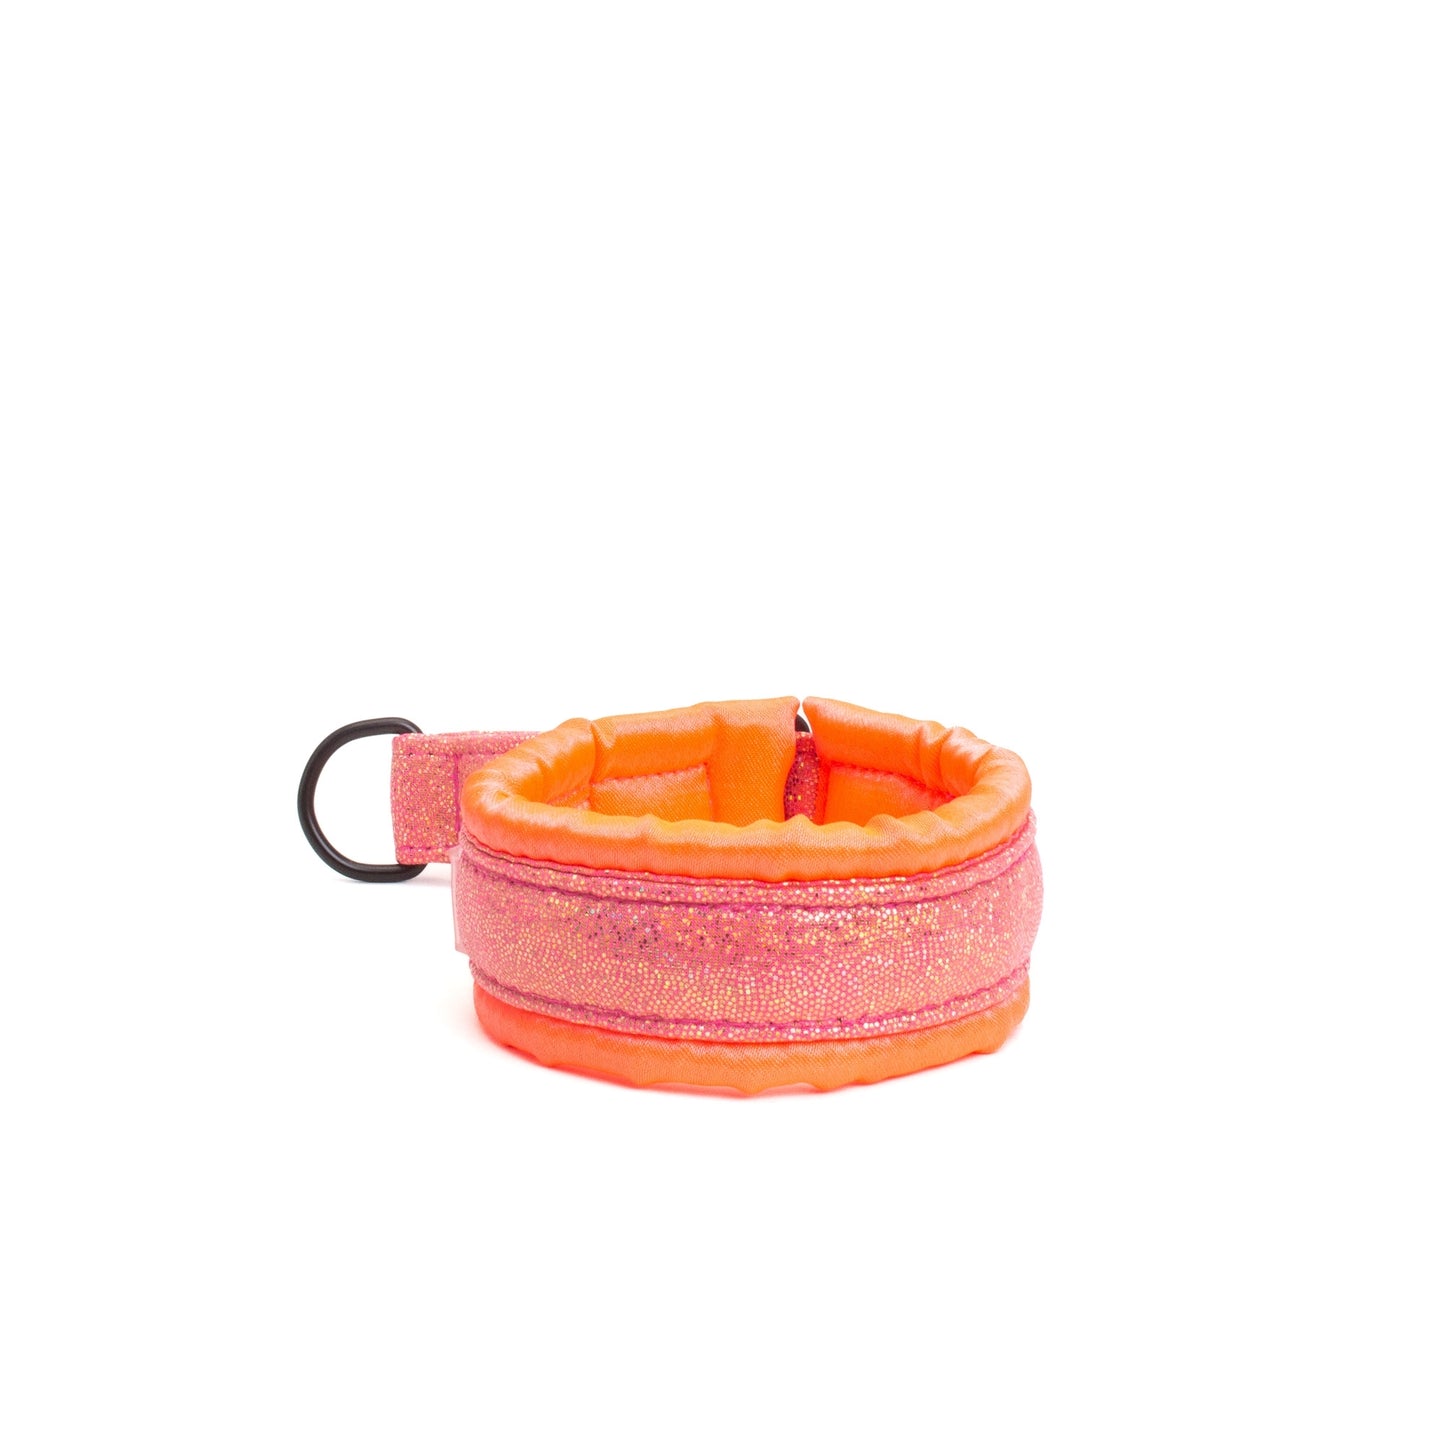 Small / Medium / Large Martingale Collar Poodle Supply Glossy Neon Orange